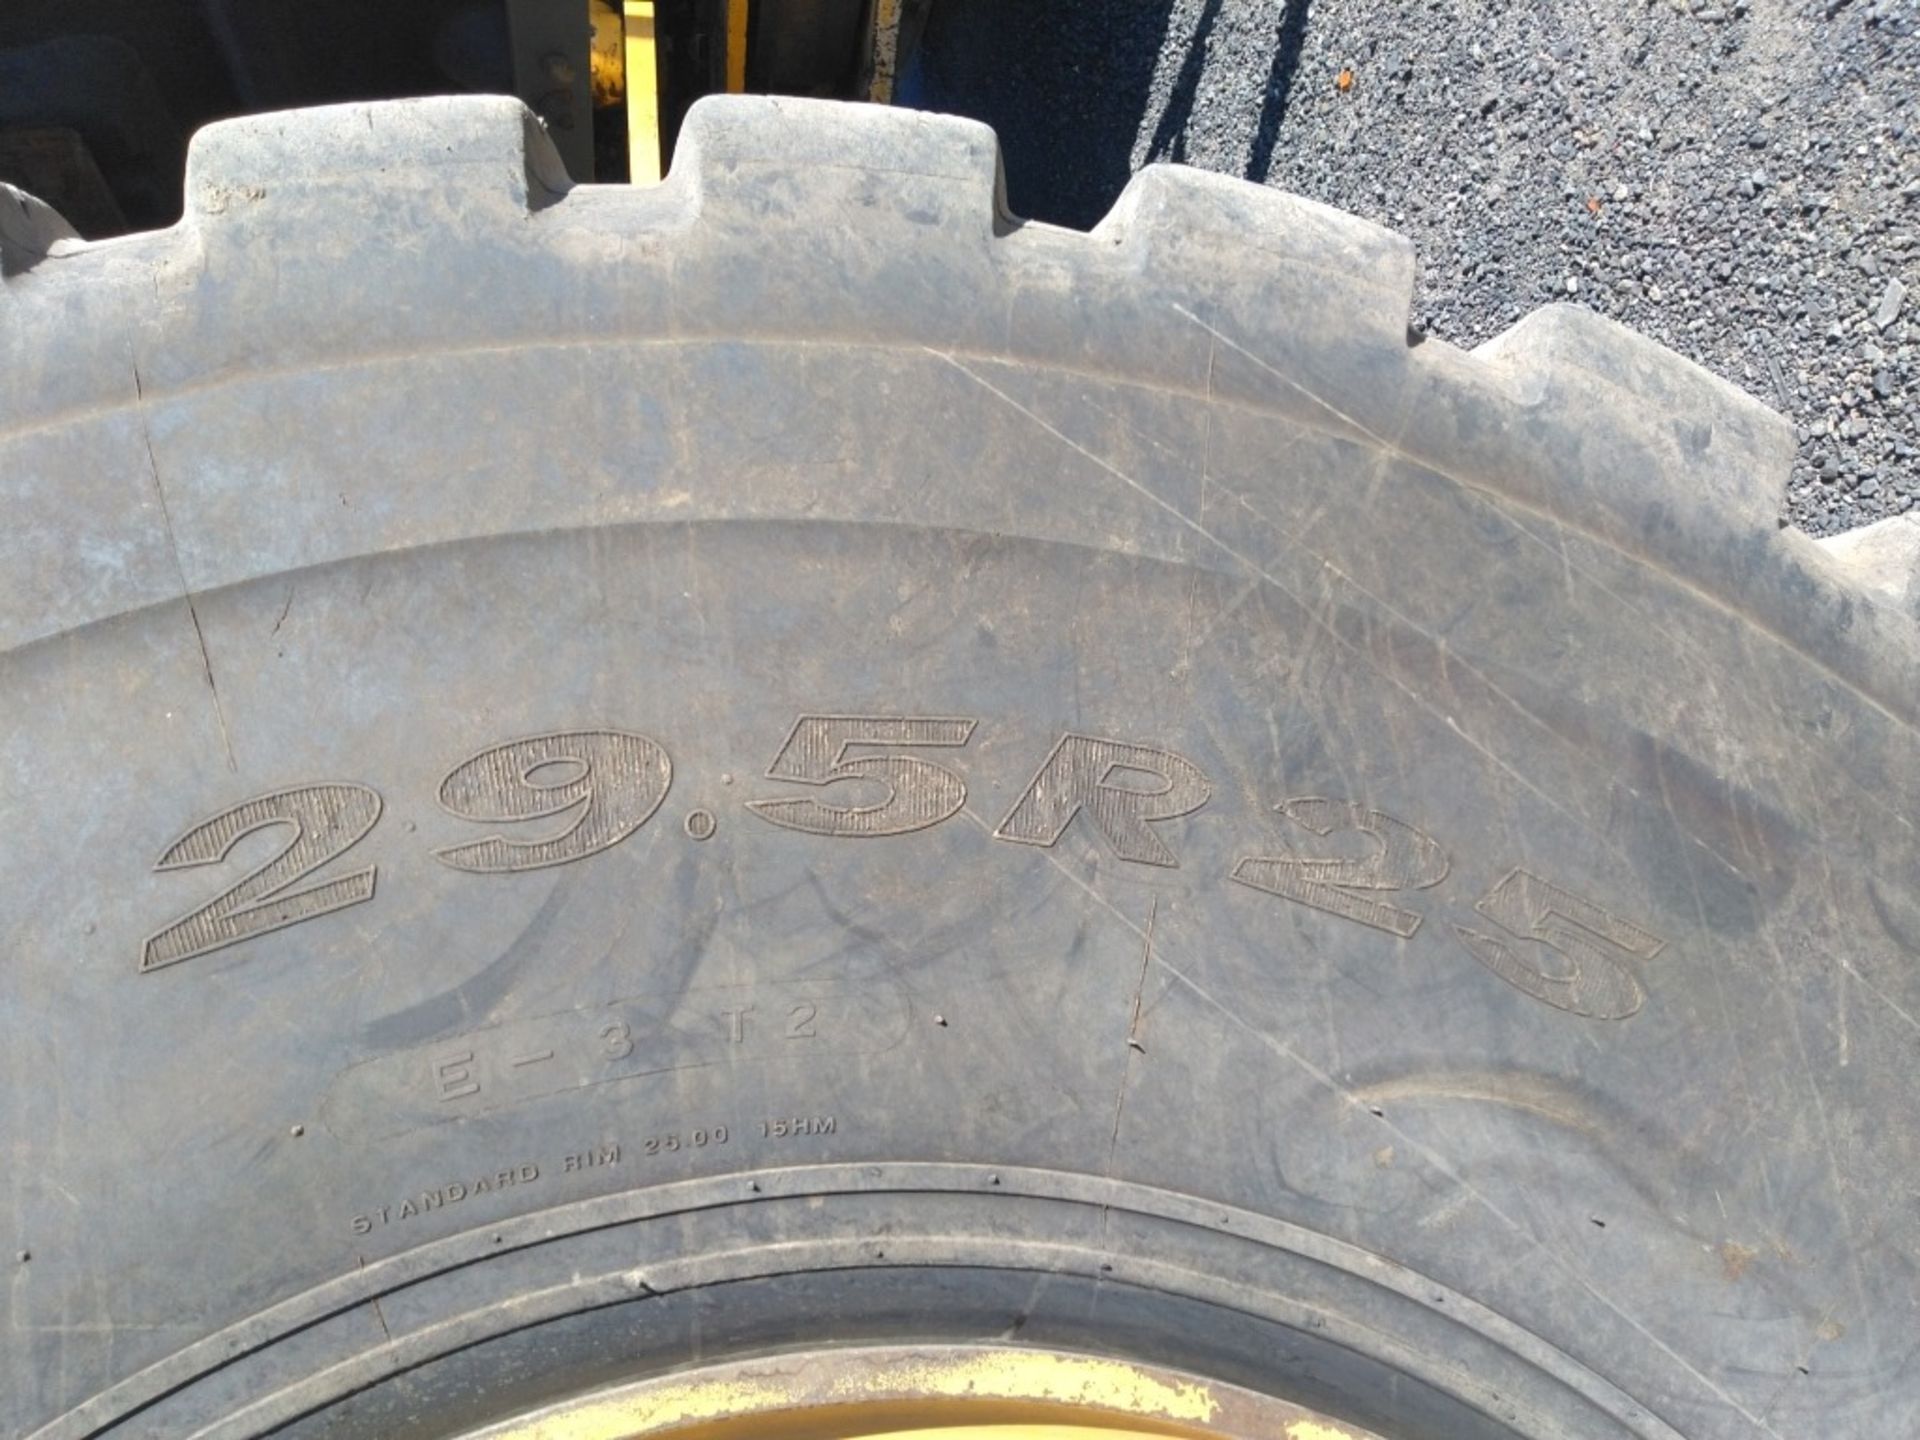 John Deere 844K Wheel Loader - Image 25 of 56